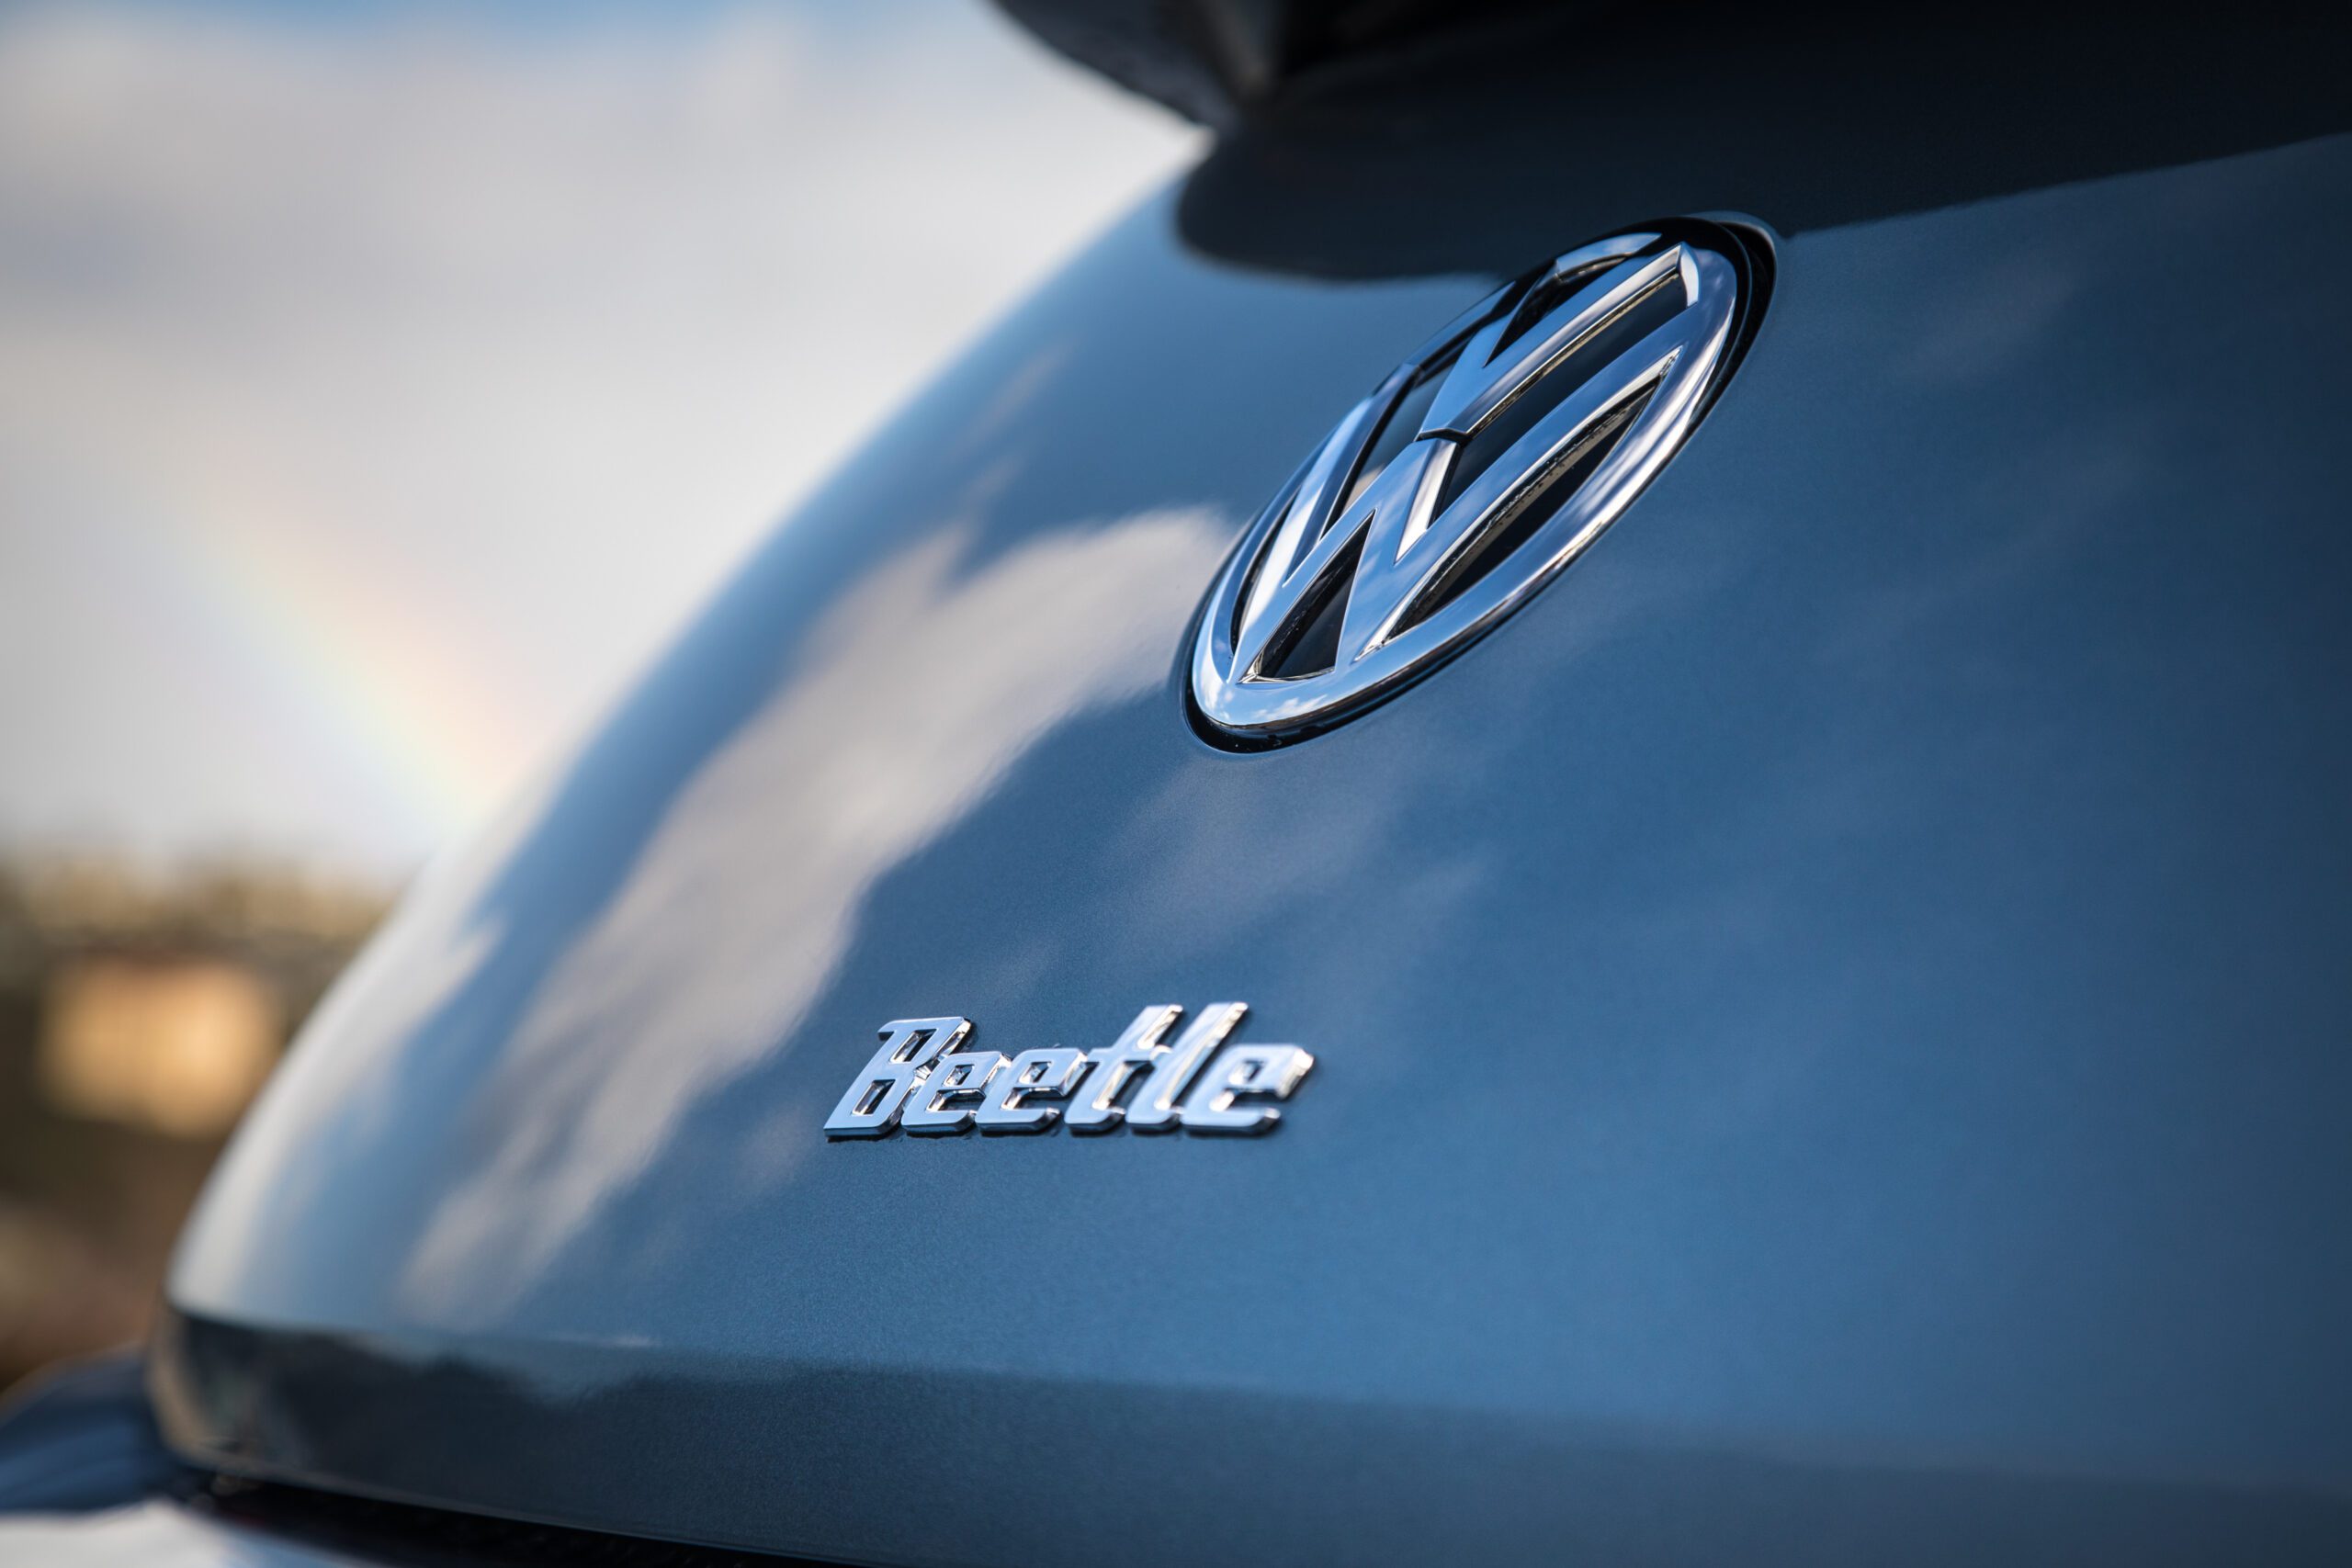 2019 VW Beetle Final Edition badge on trunk lid